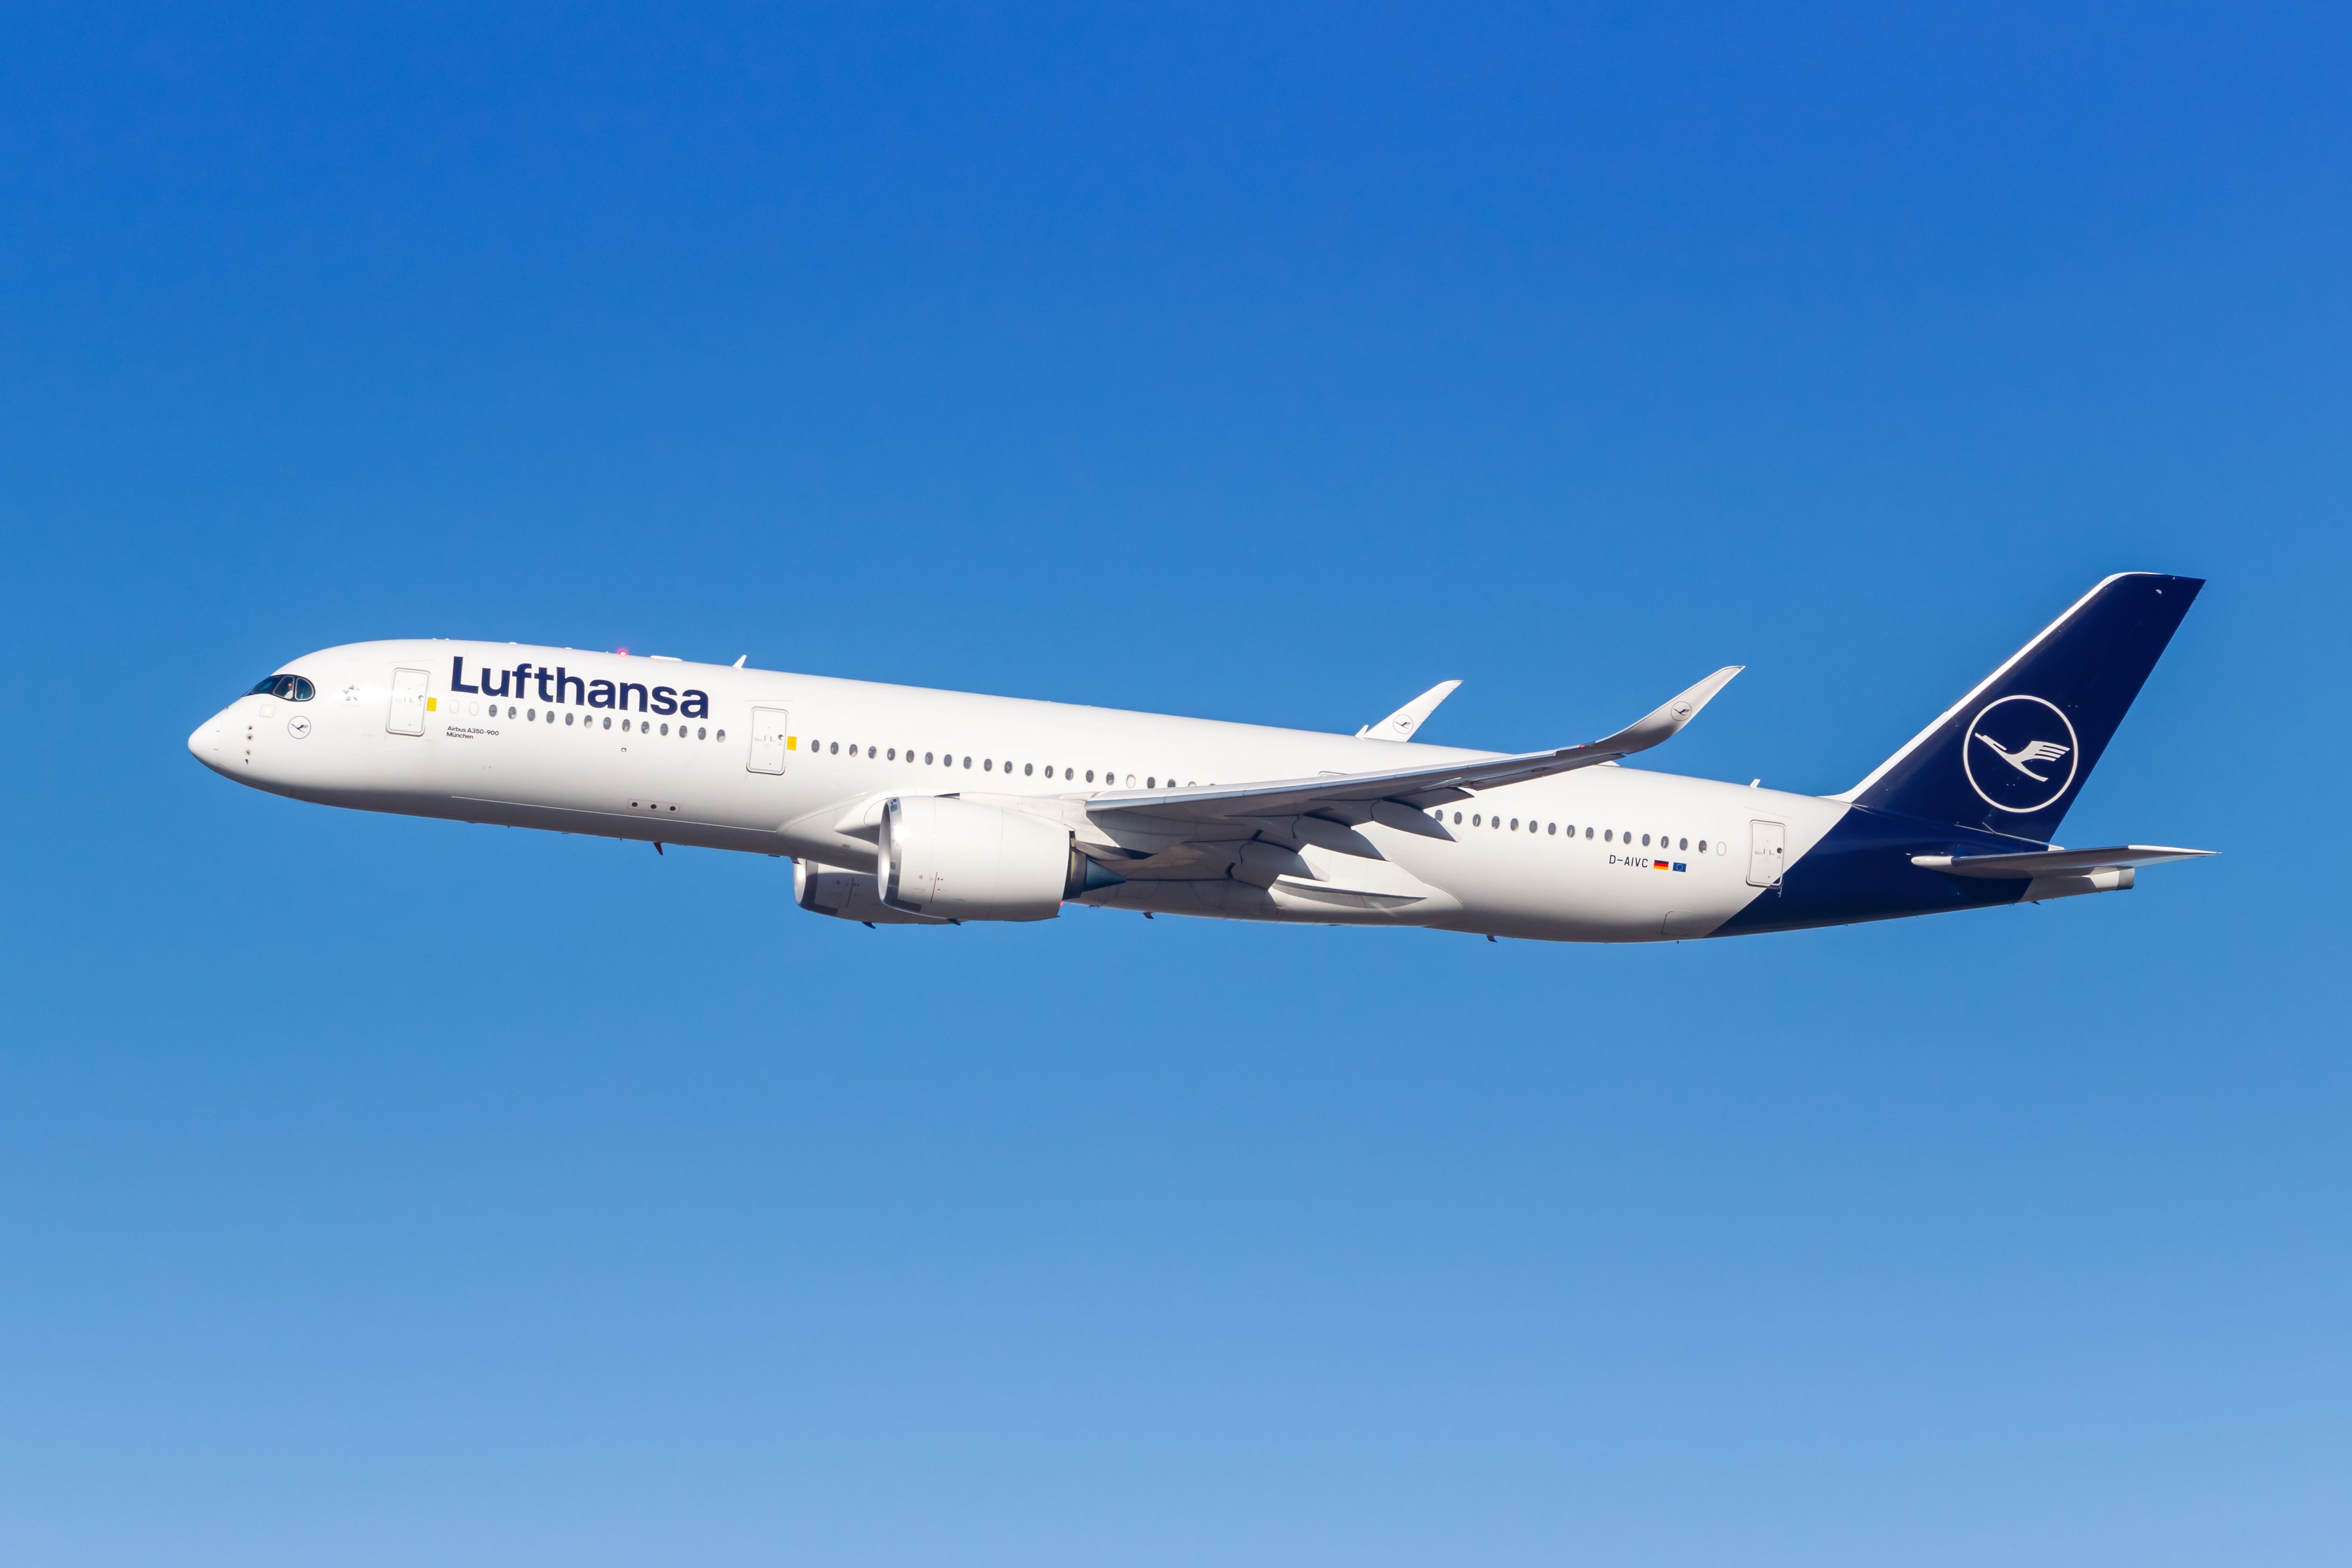 Lufthansa Airbus A350-900 departing Munich Airport MUC shutterstock_2469416291